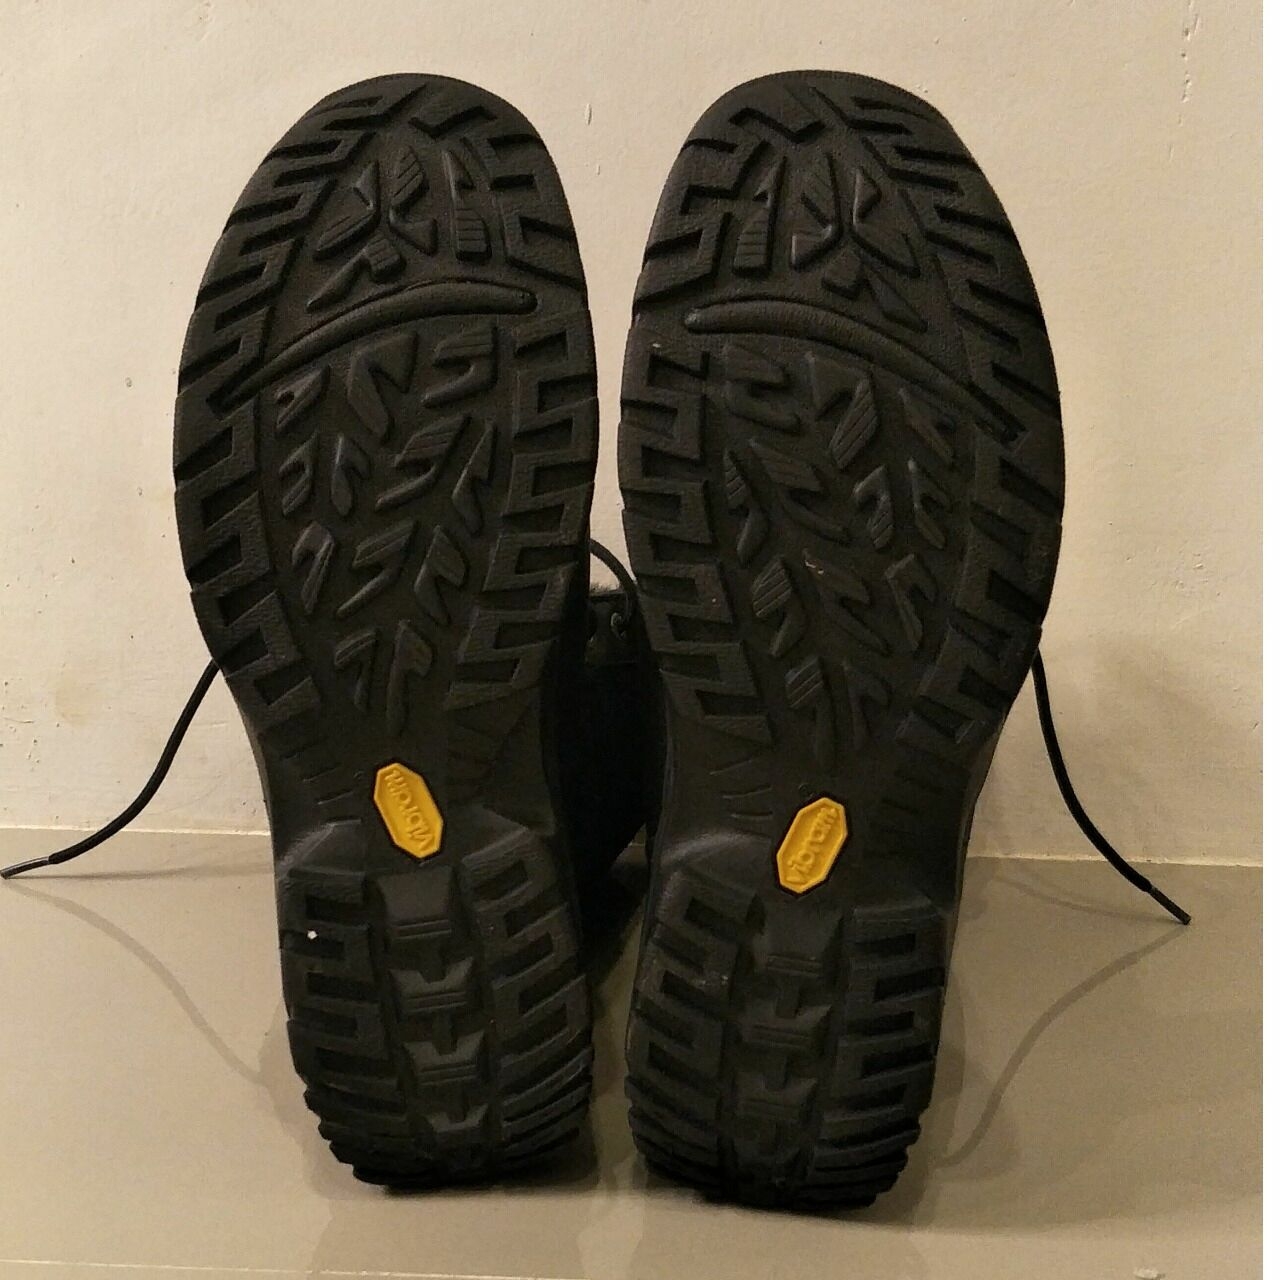 Sepatu Ugg Australia Black Boots